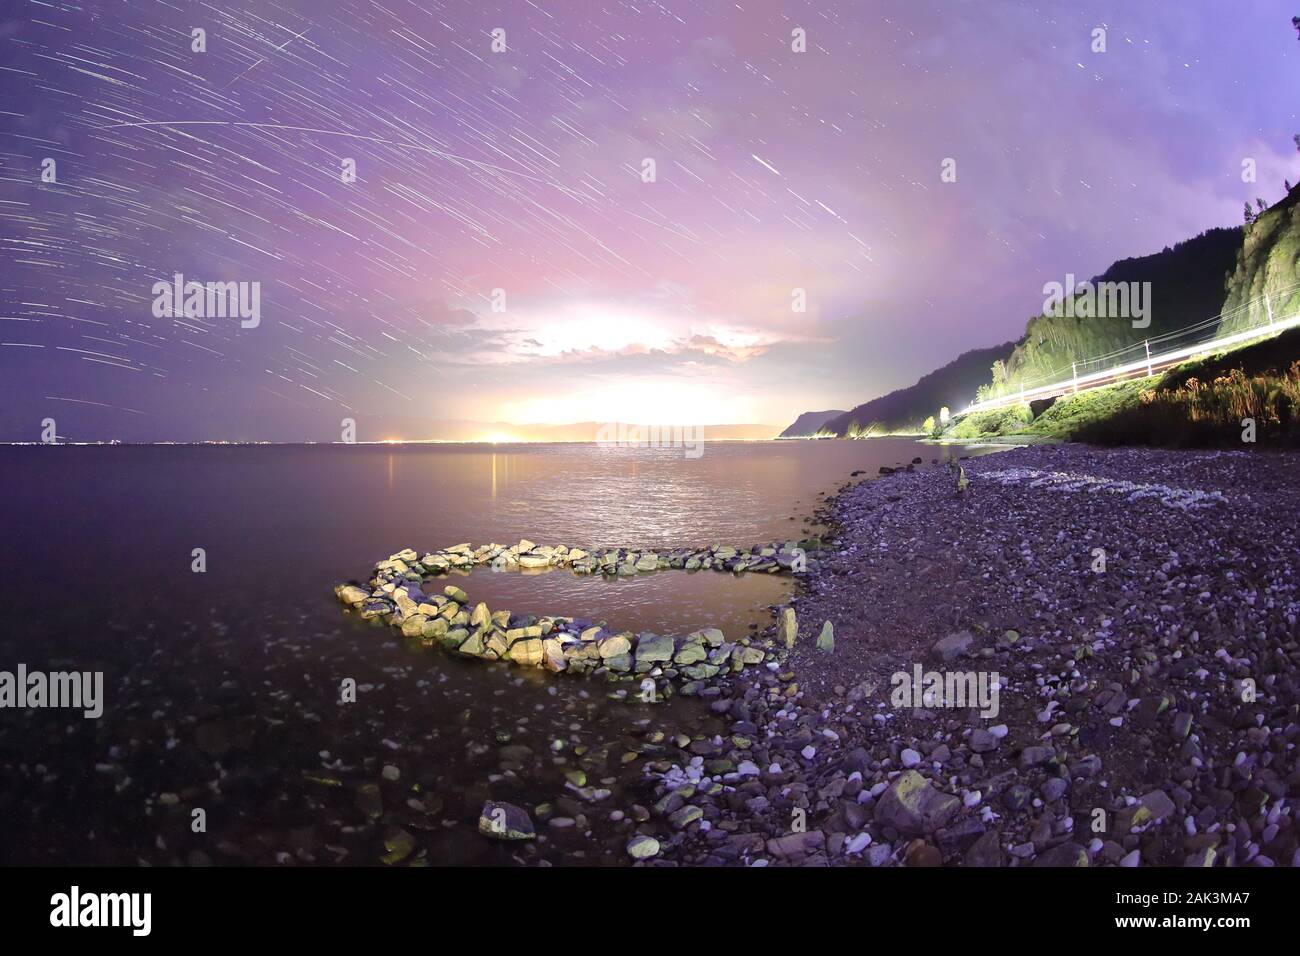 Starry Night over the lake Baikal, Republic of Buryatia, Russia Stock Photo